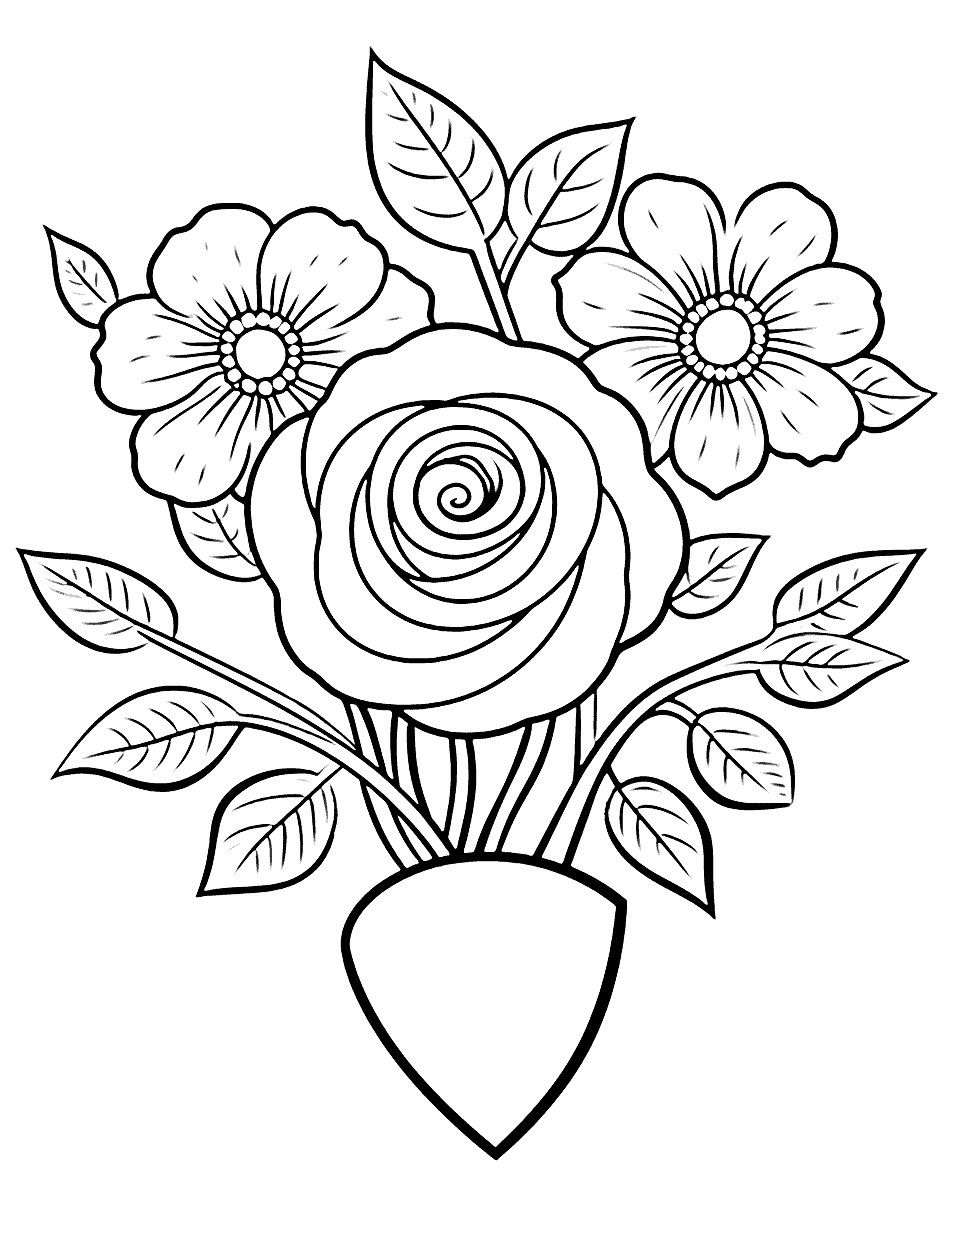 Heart-Shaped Rose Arrangement Flower Coloring Page - A beautiful heart-shaped arrangement of roses.